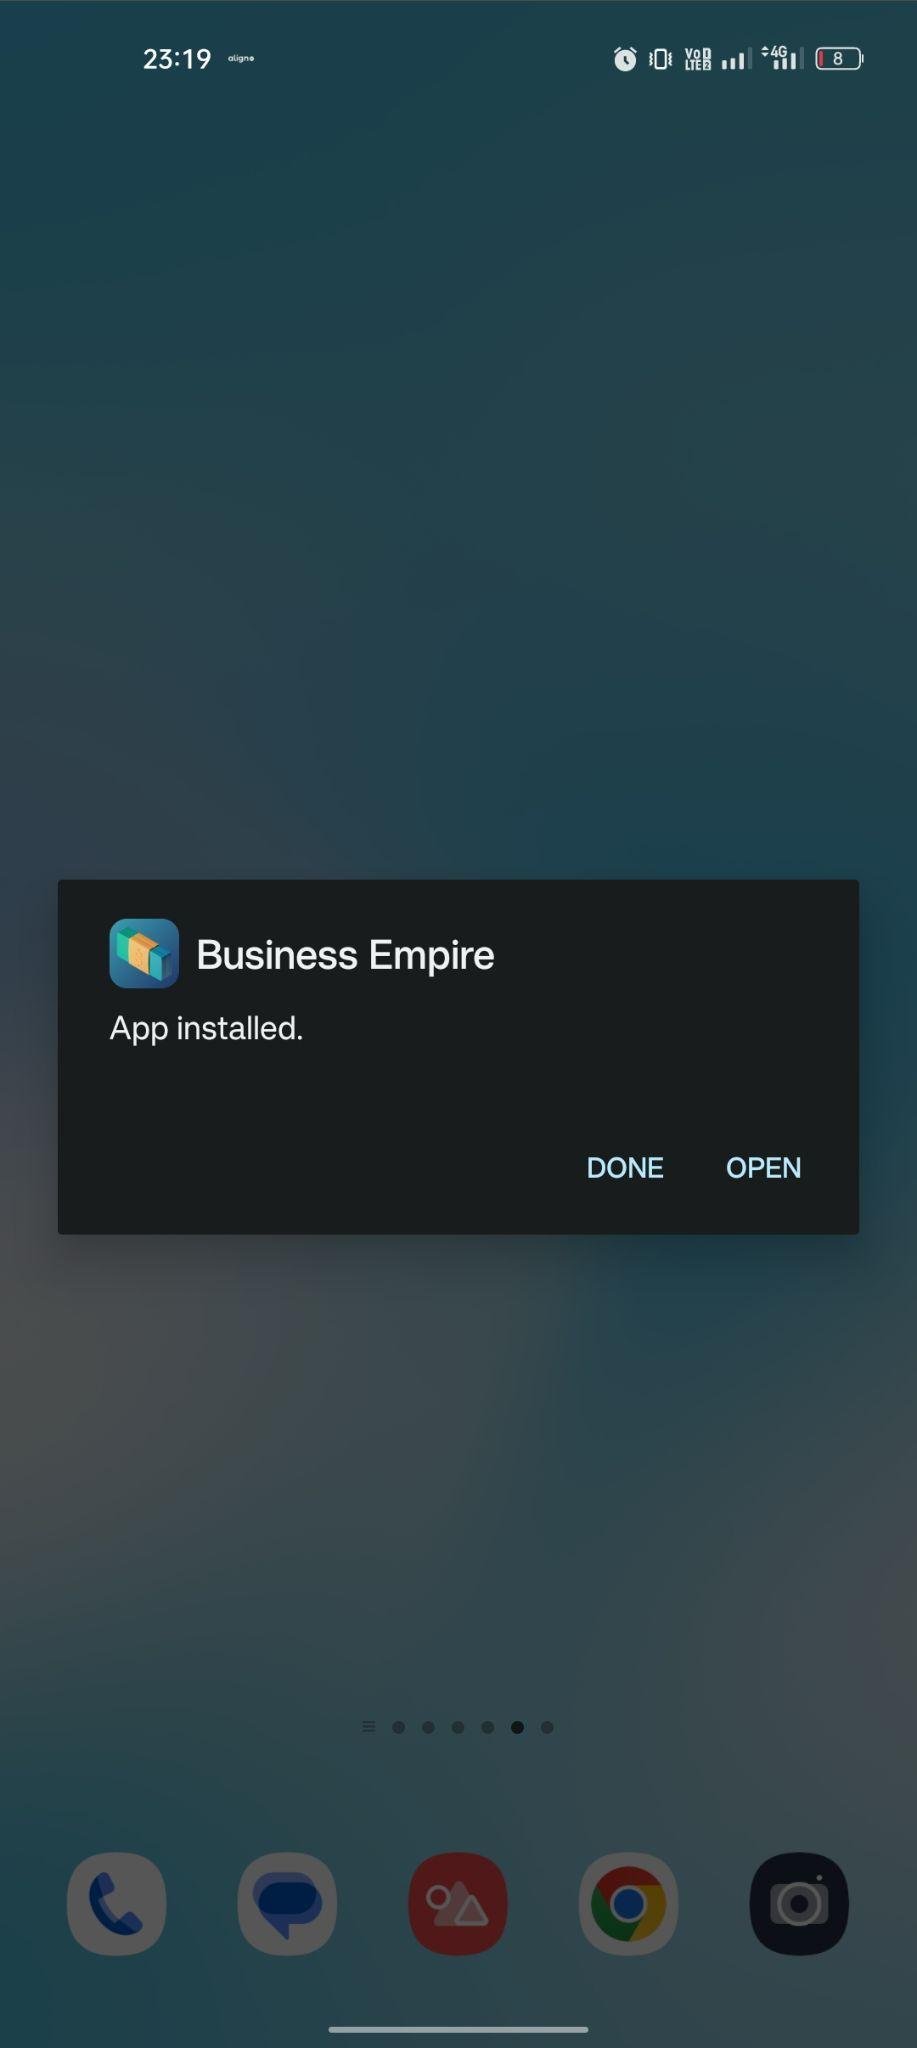 Business Empire: RichMan apk installed